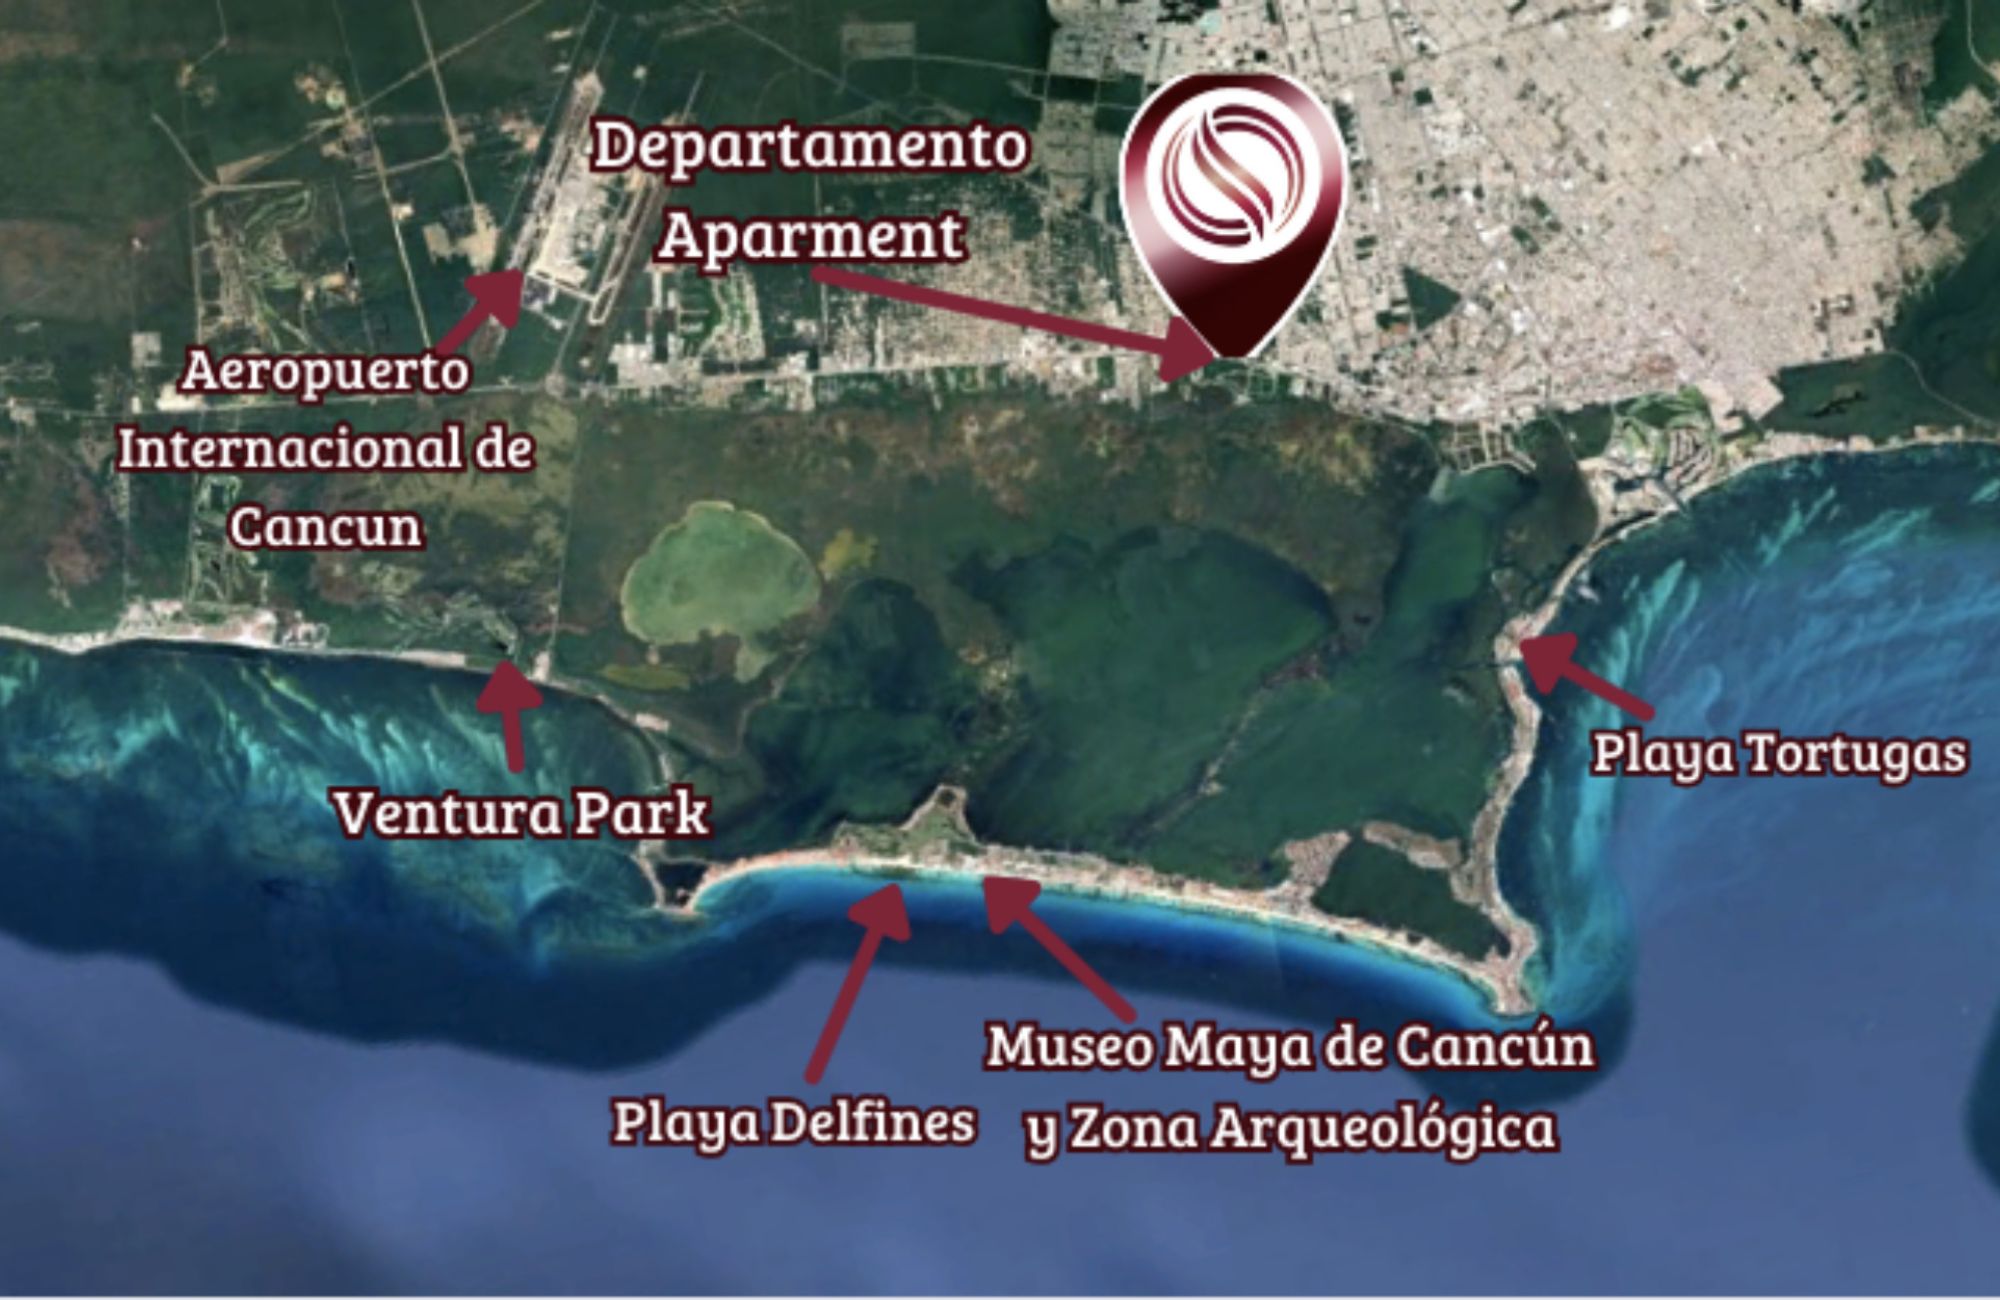 Departamento con alberca vista a la laguna,  jacuzzi, cine en venta Cancun.